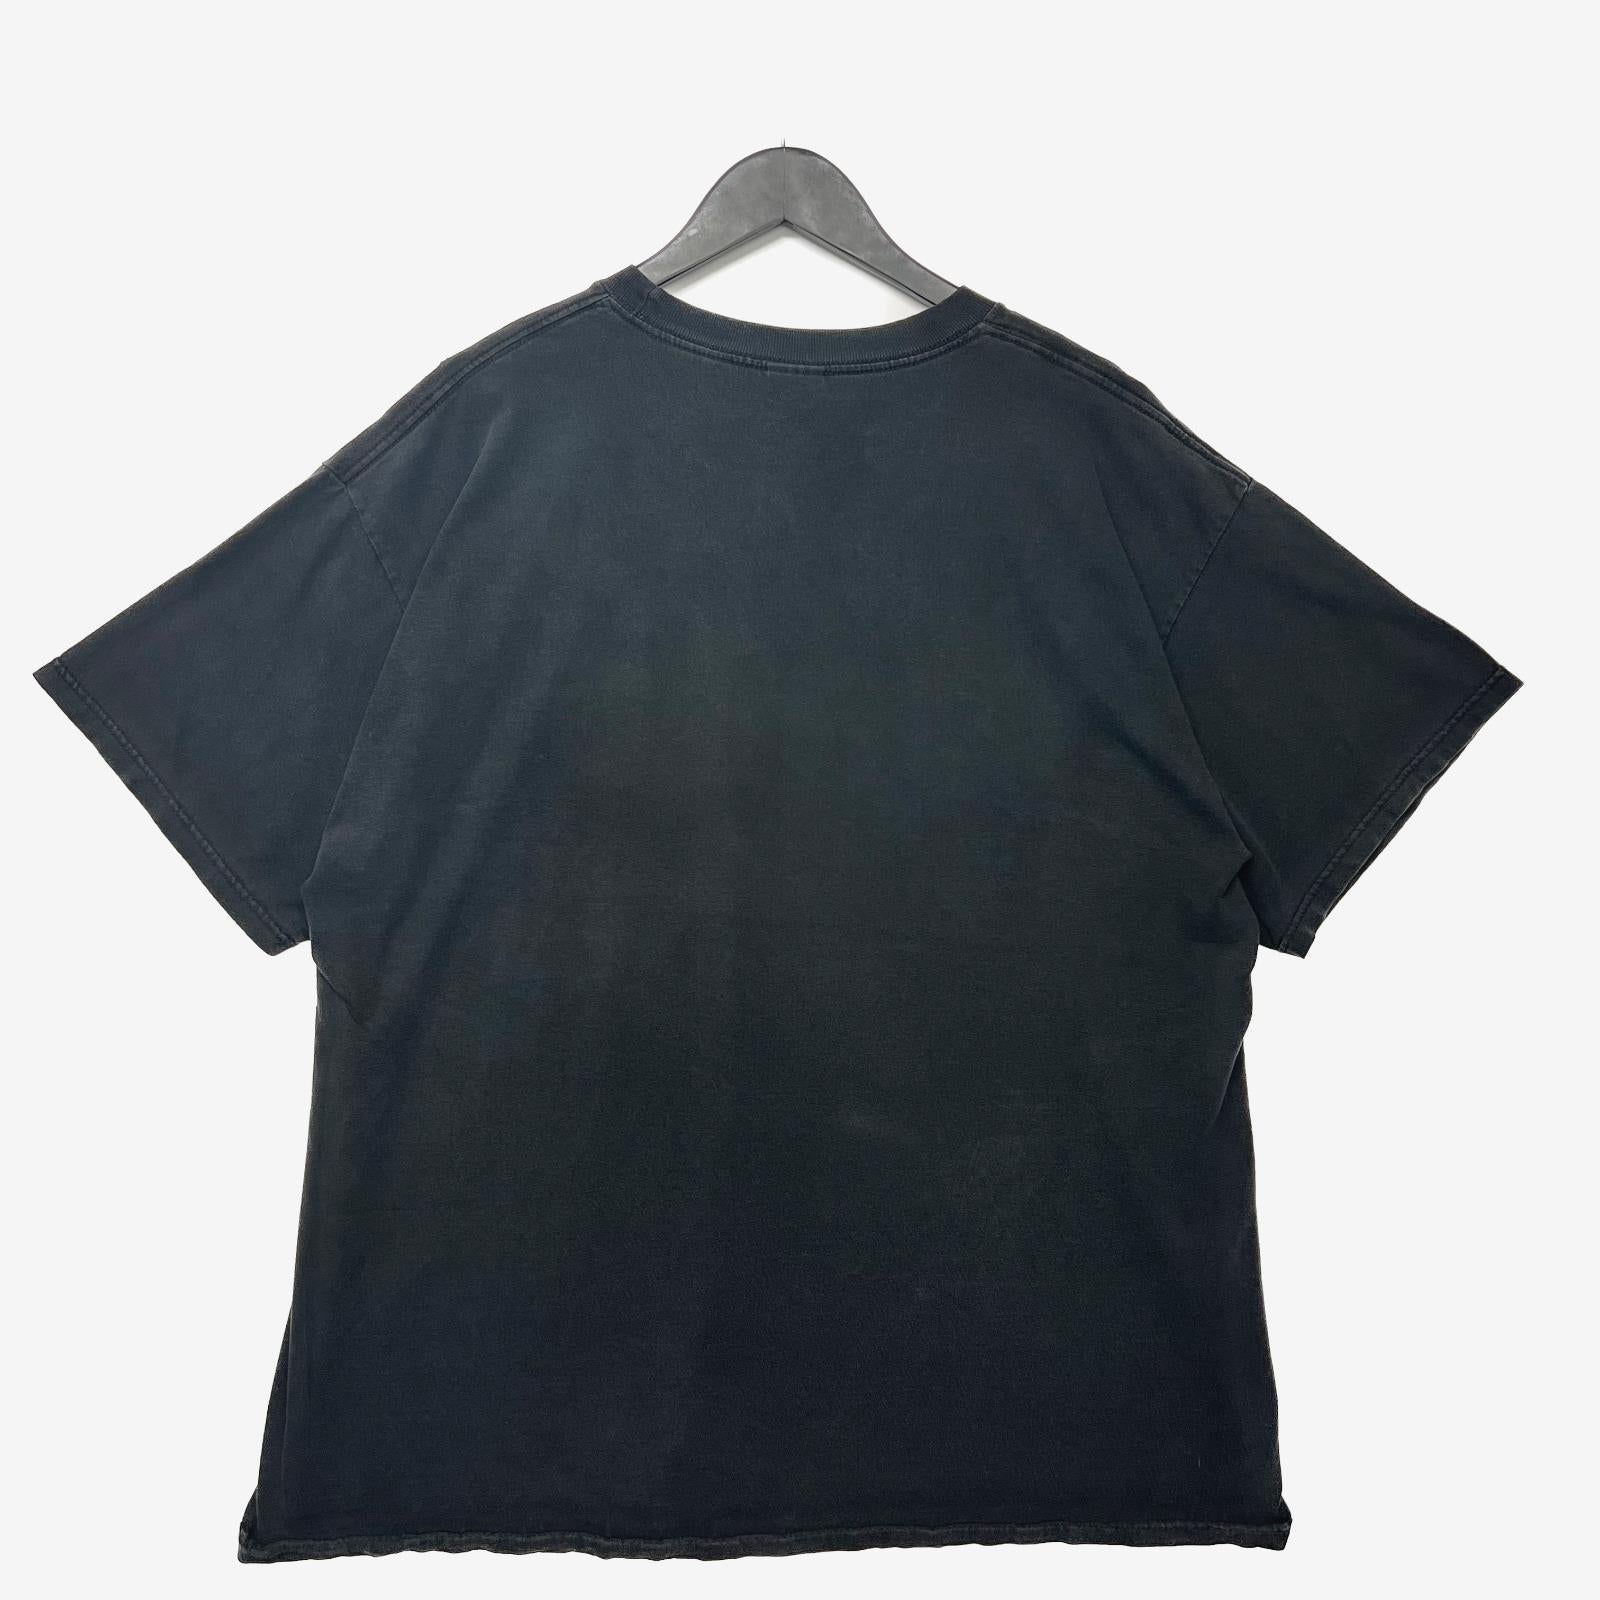 Jesus T-shirt Size XL